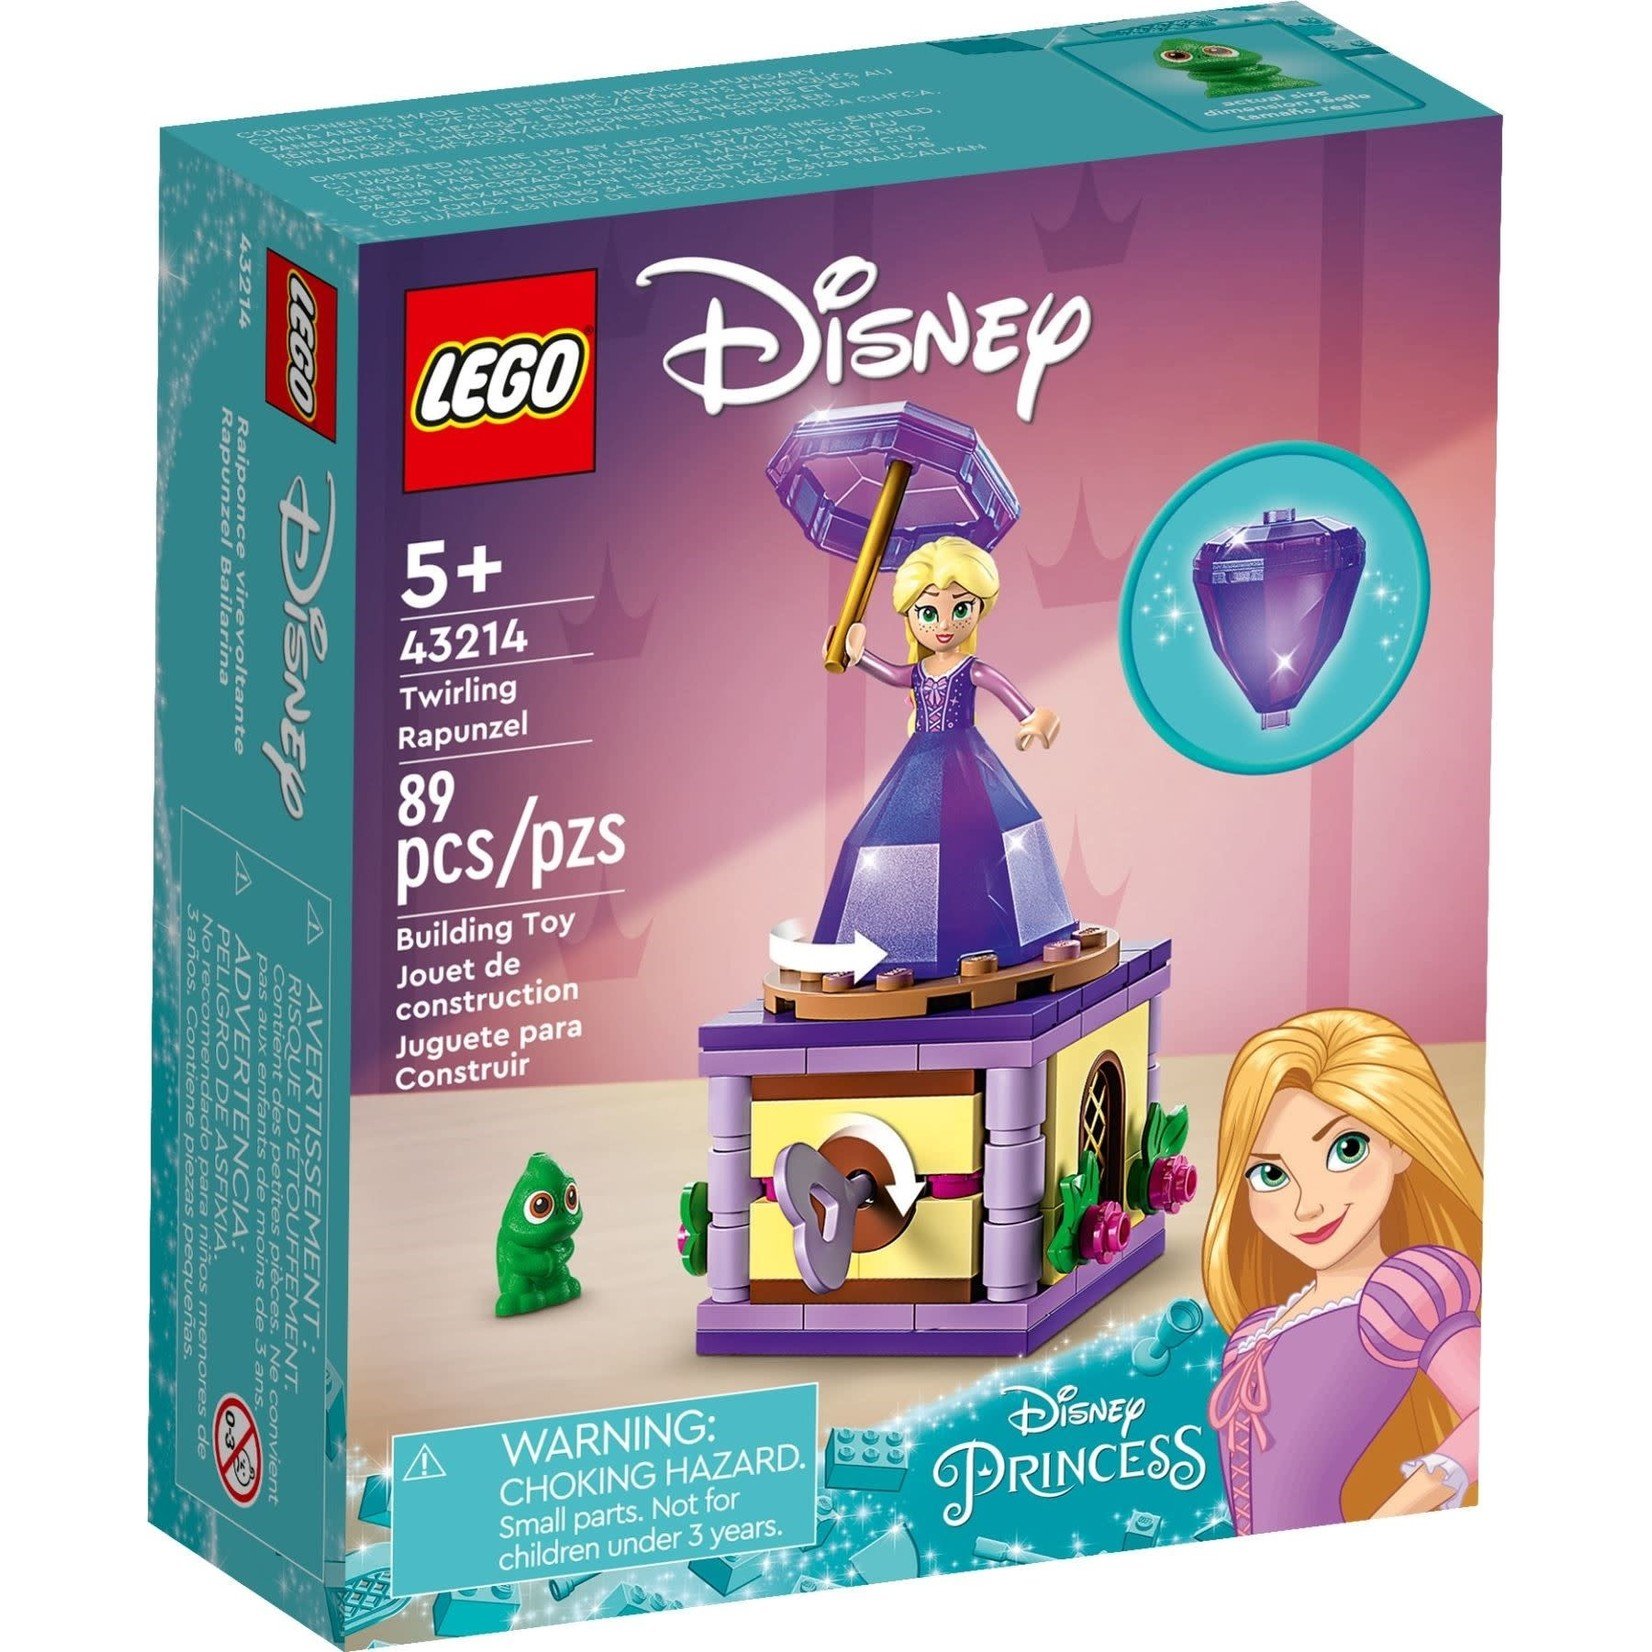 LEGO Draaiende Rapunzel - 43214